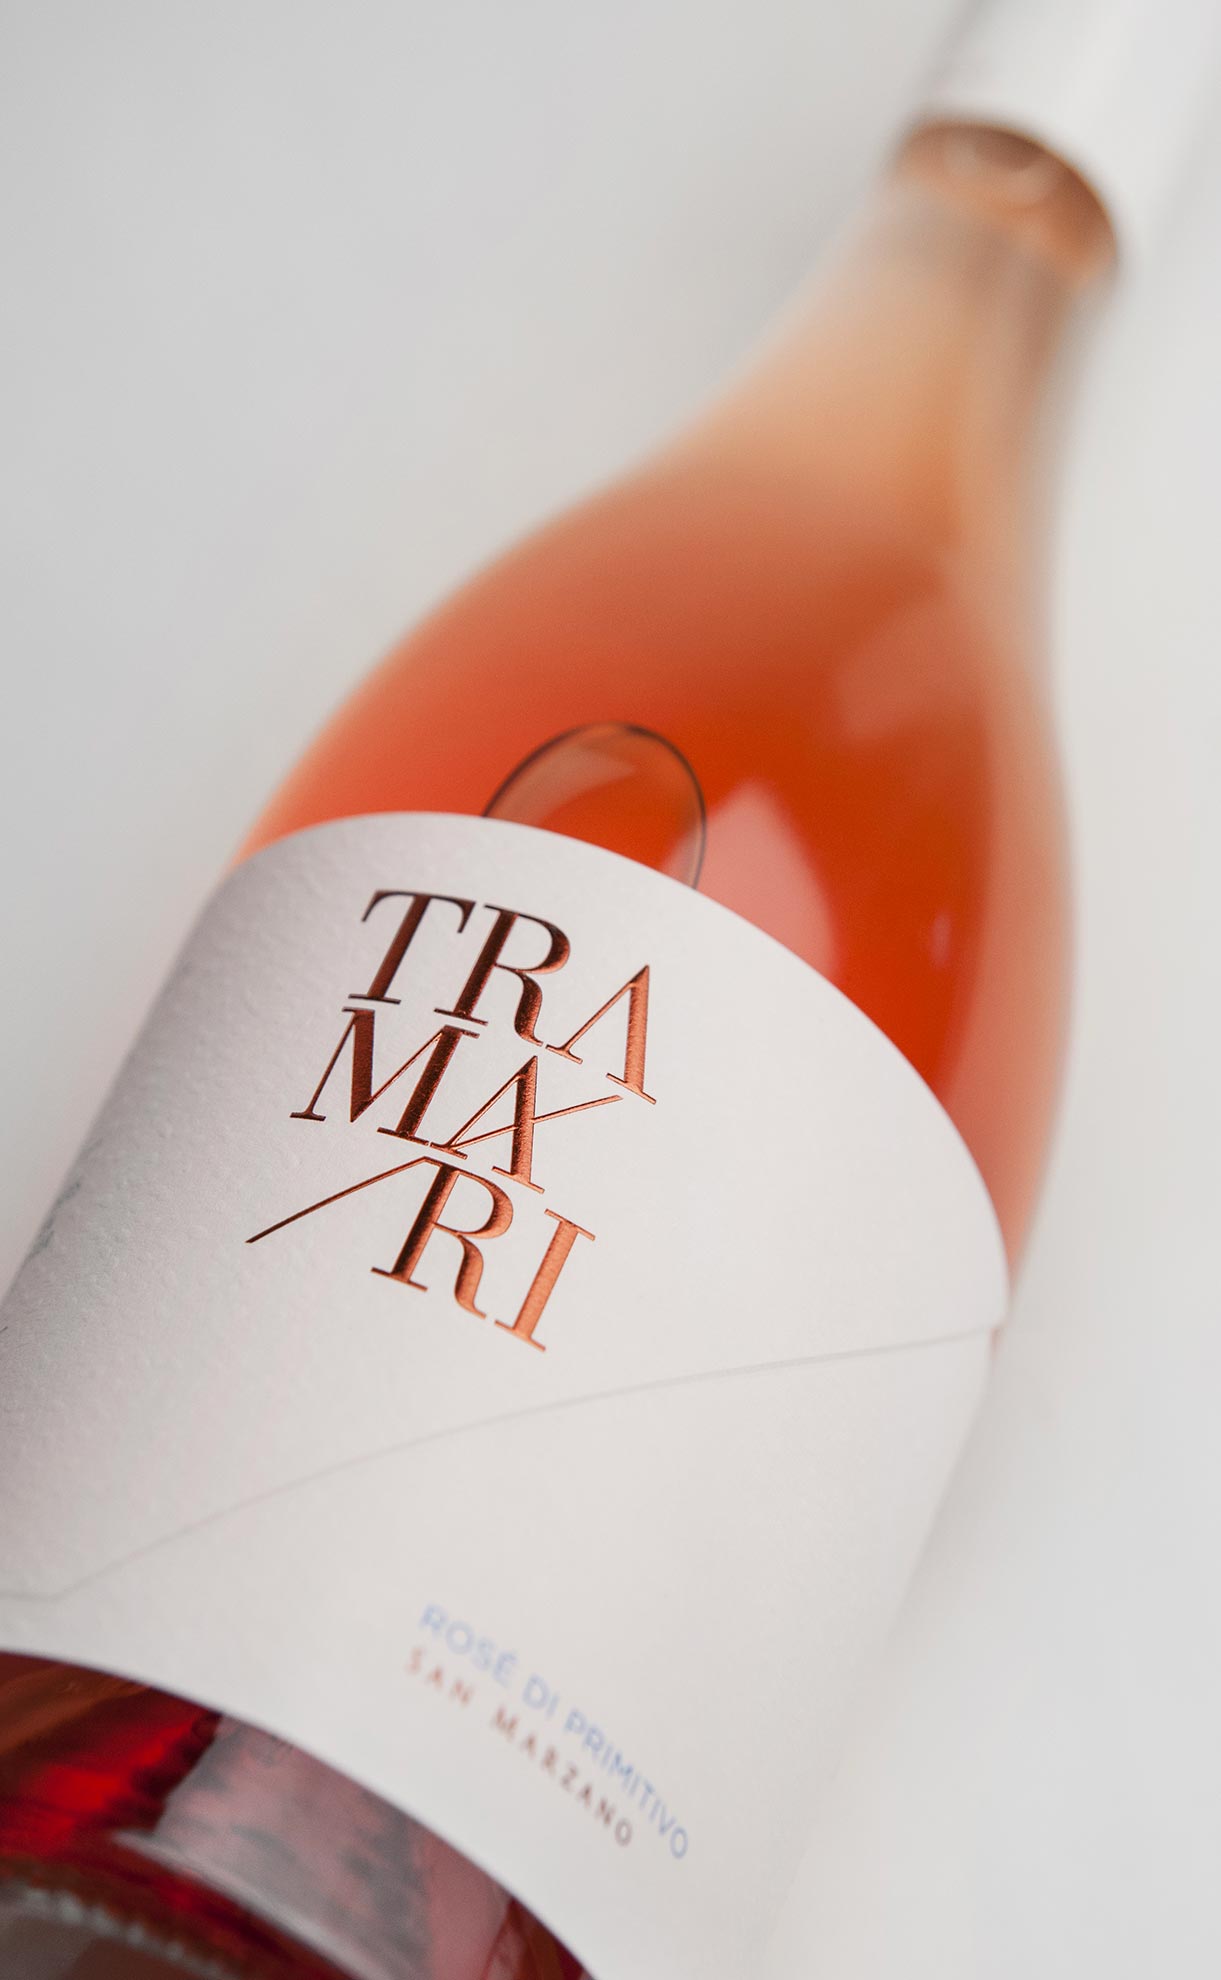 Tramari wine